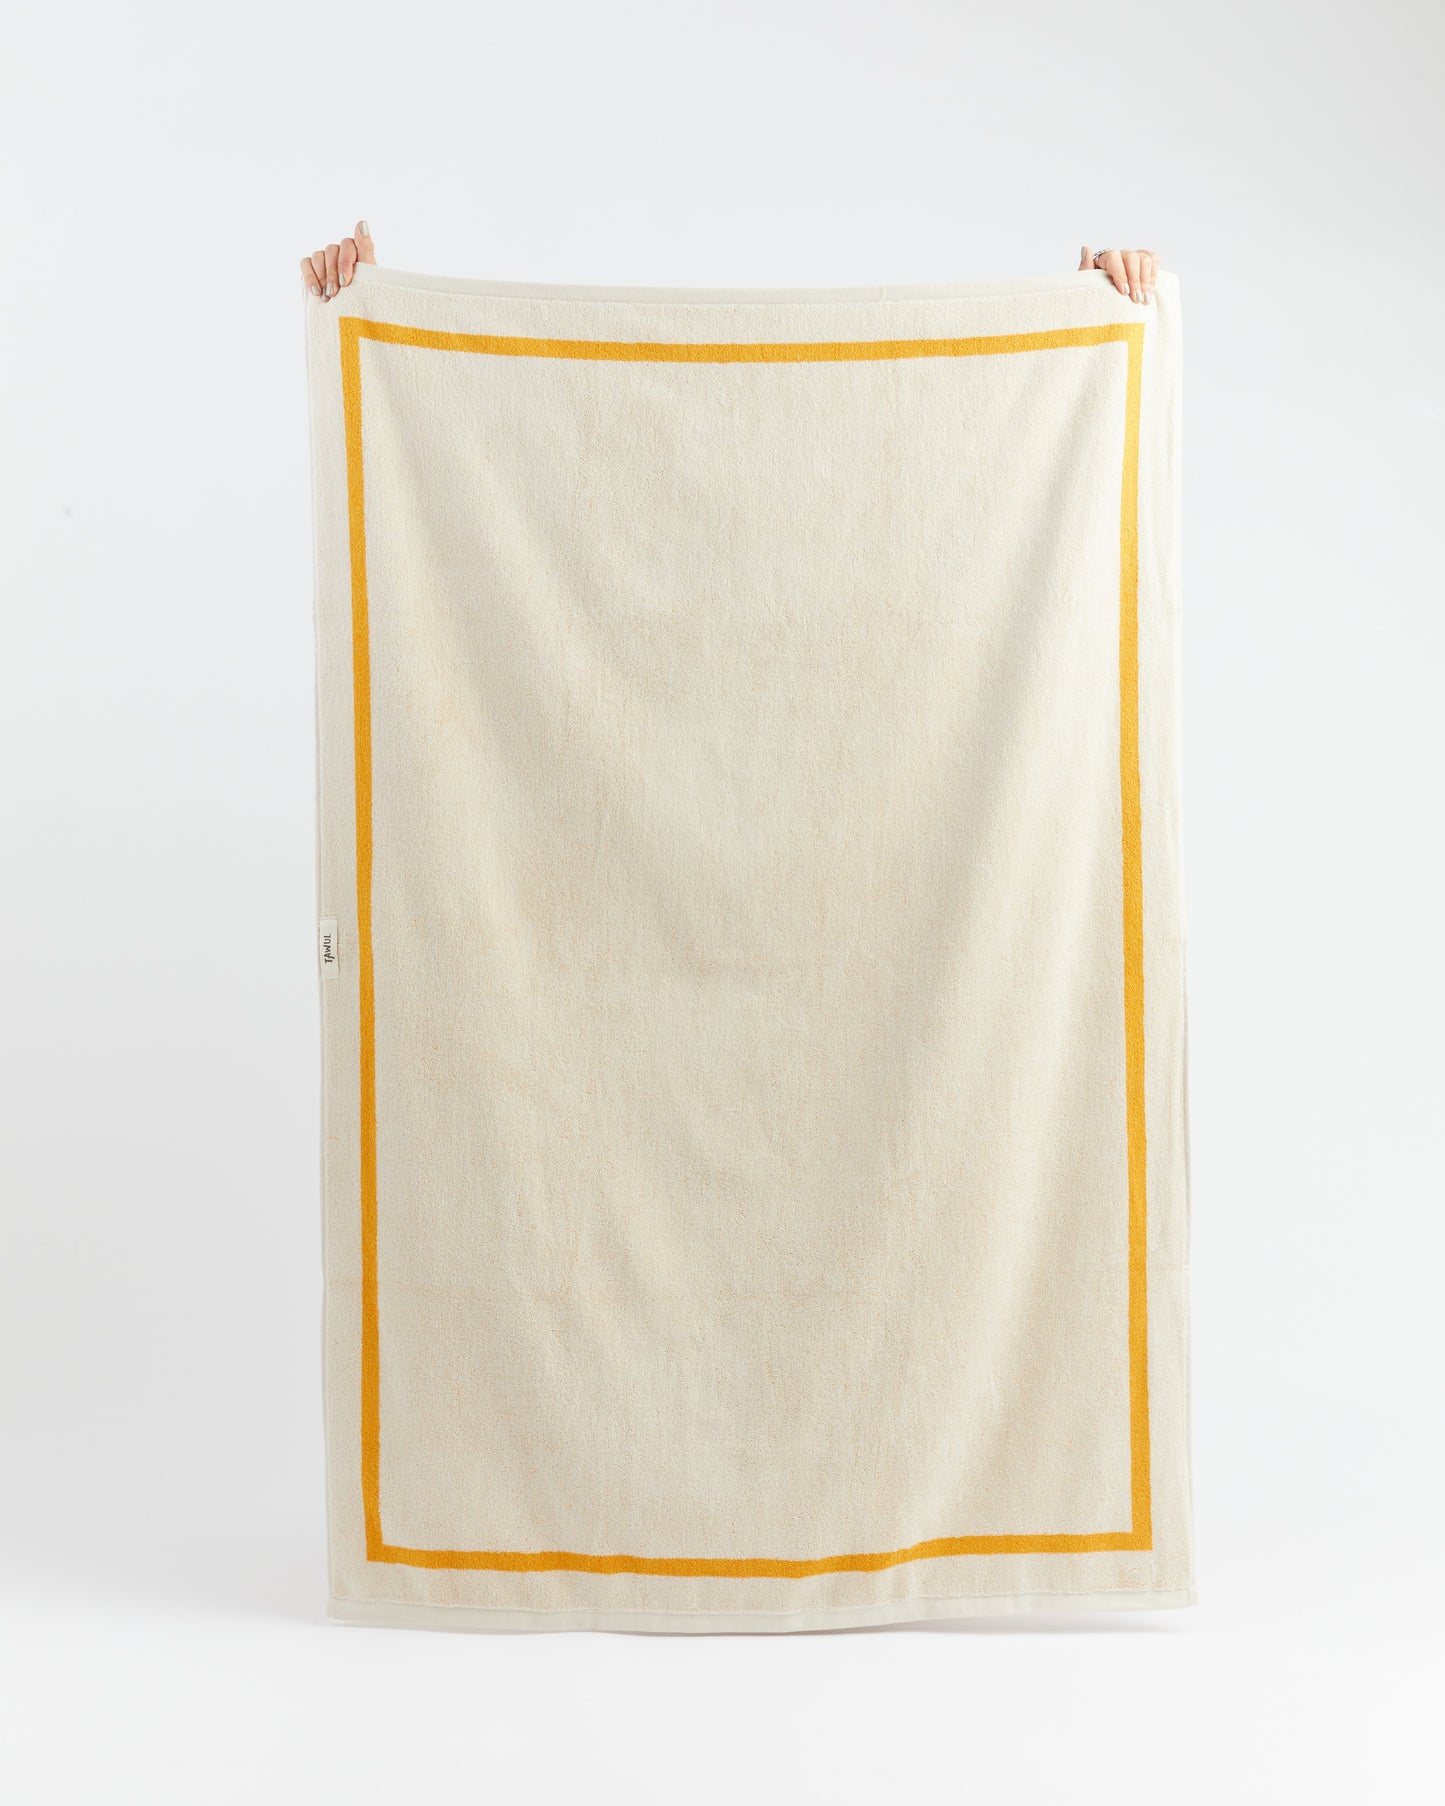 8 x Set of Classic Ecru and Yellow Towels